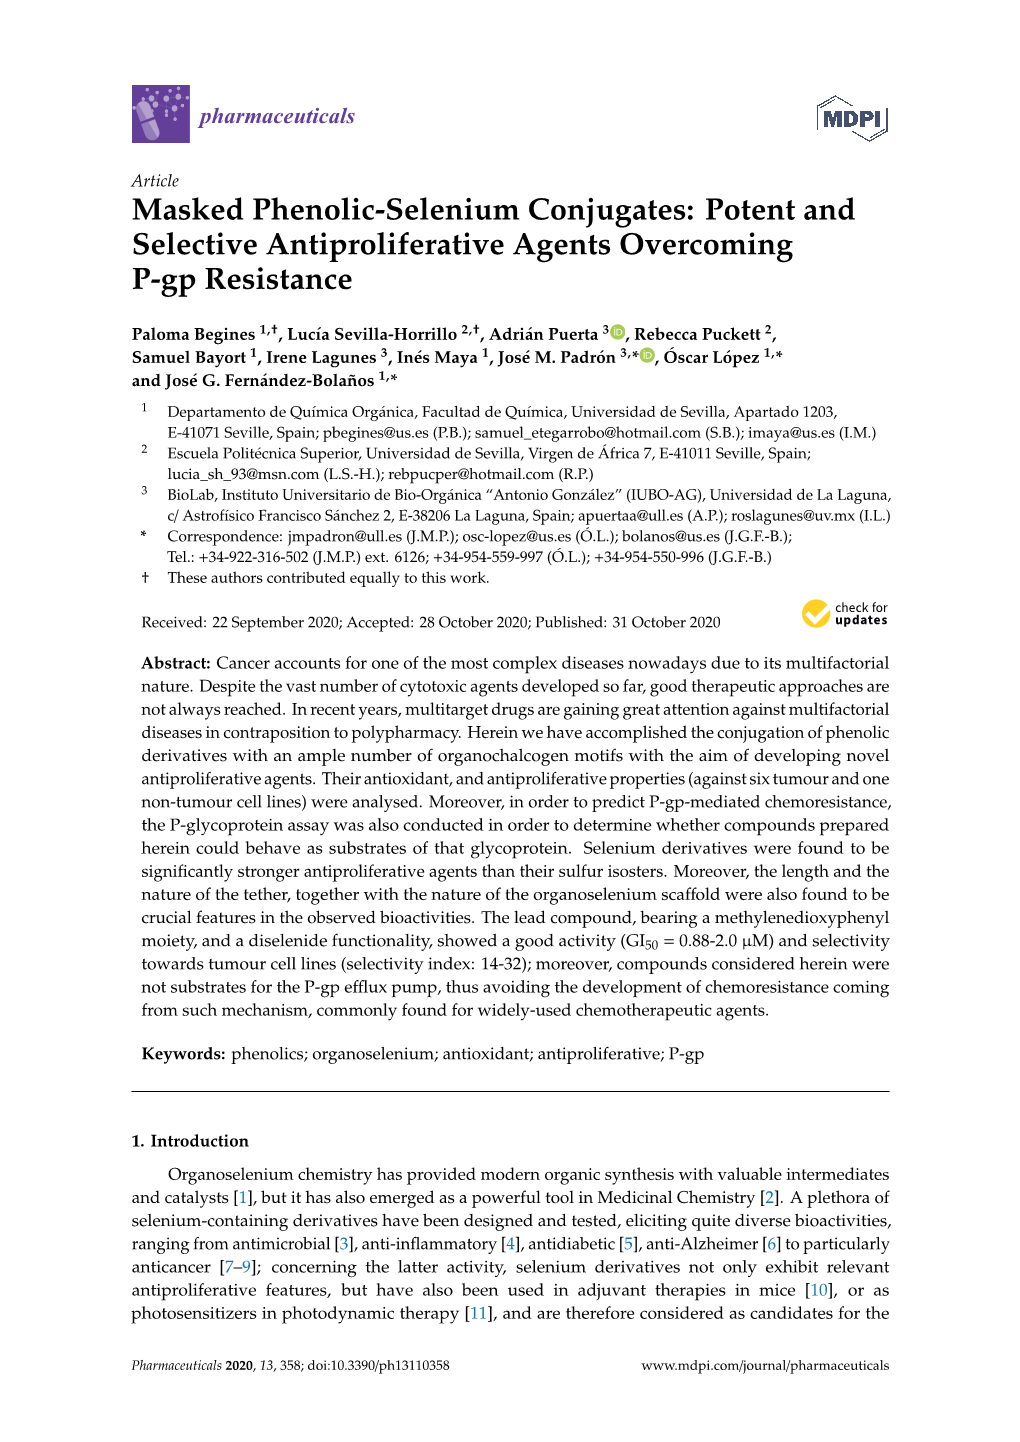 Masked Phenolic-Selenium Conjugates: Potent and Selective Antiproliferative Agents Overcoming P-Gp Resistance